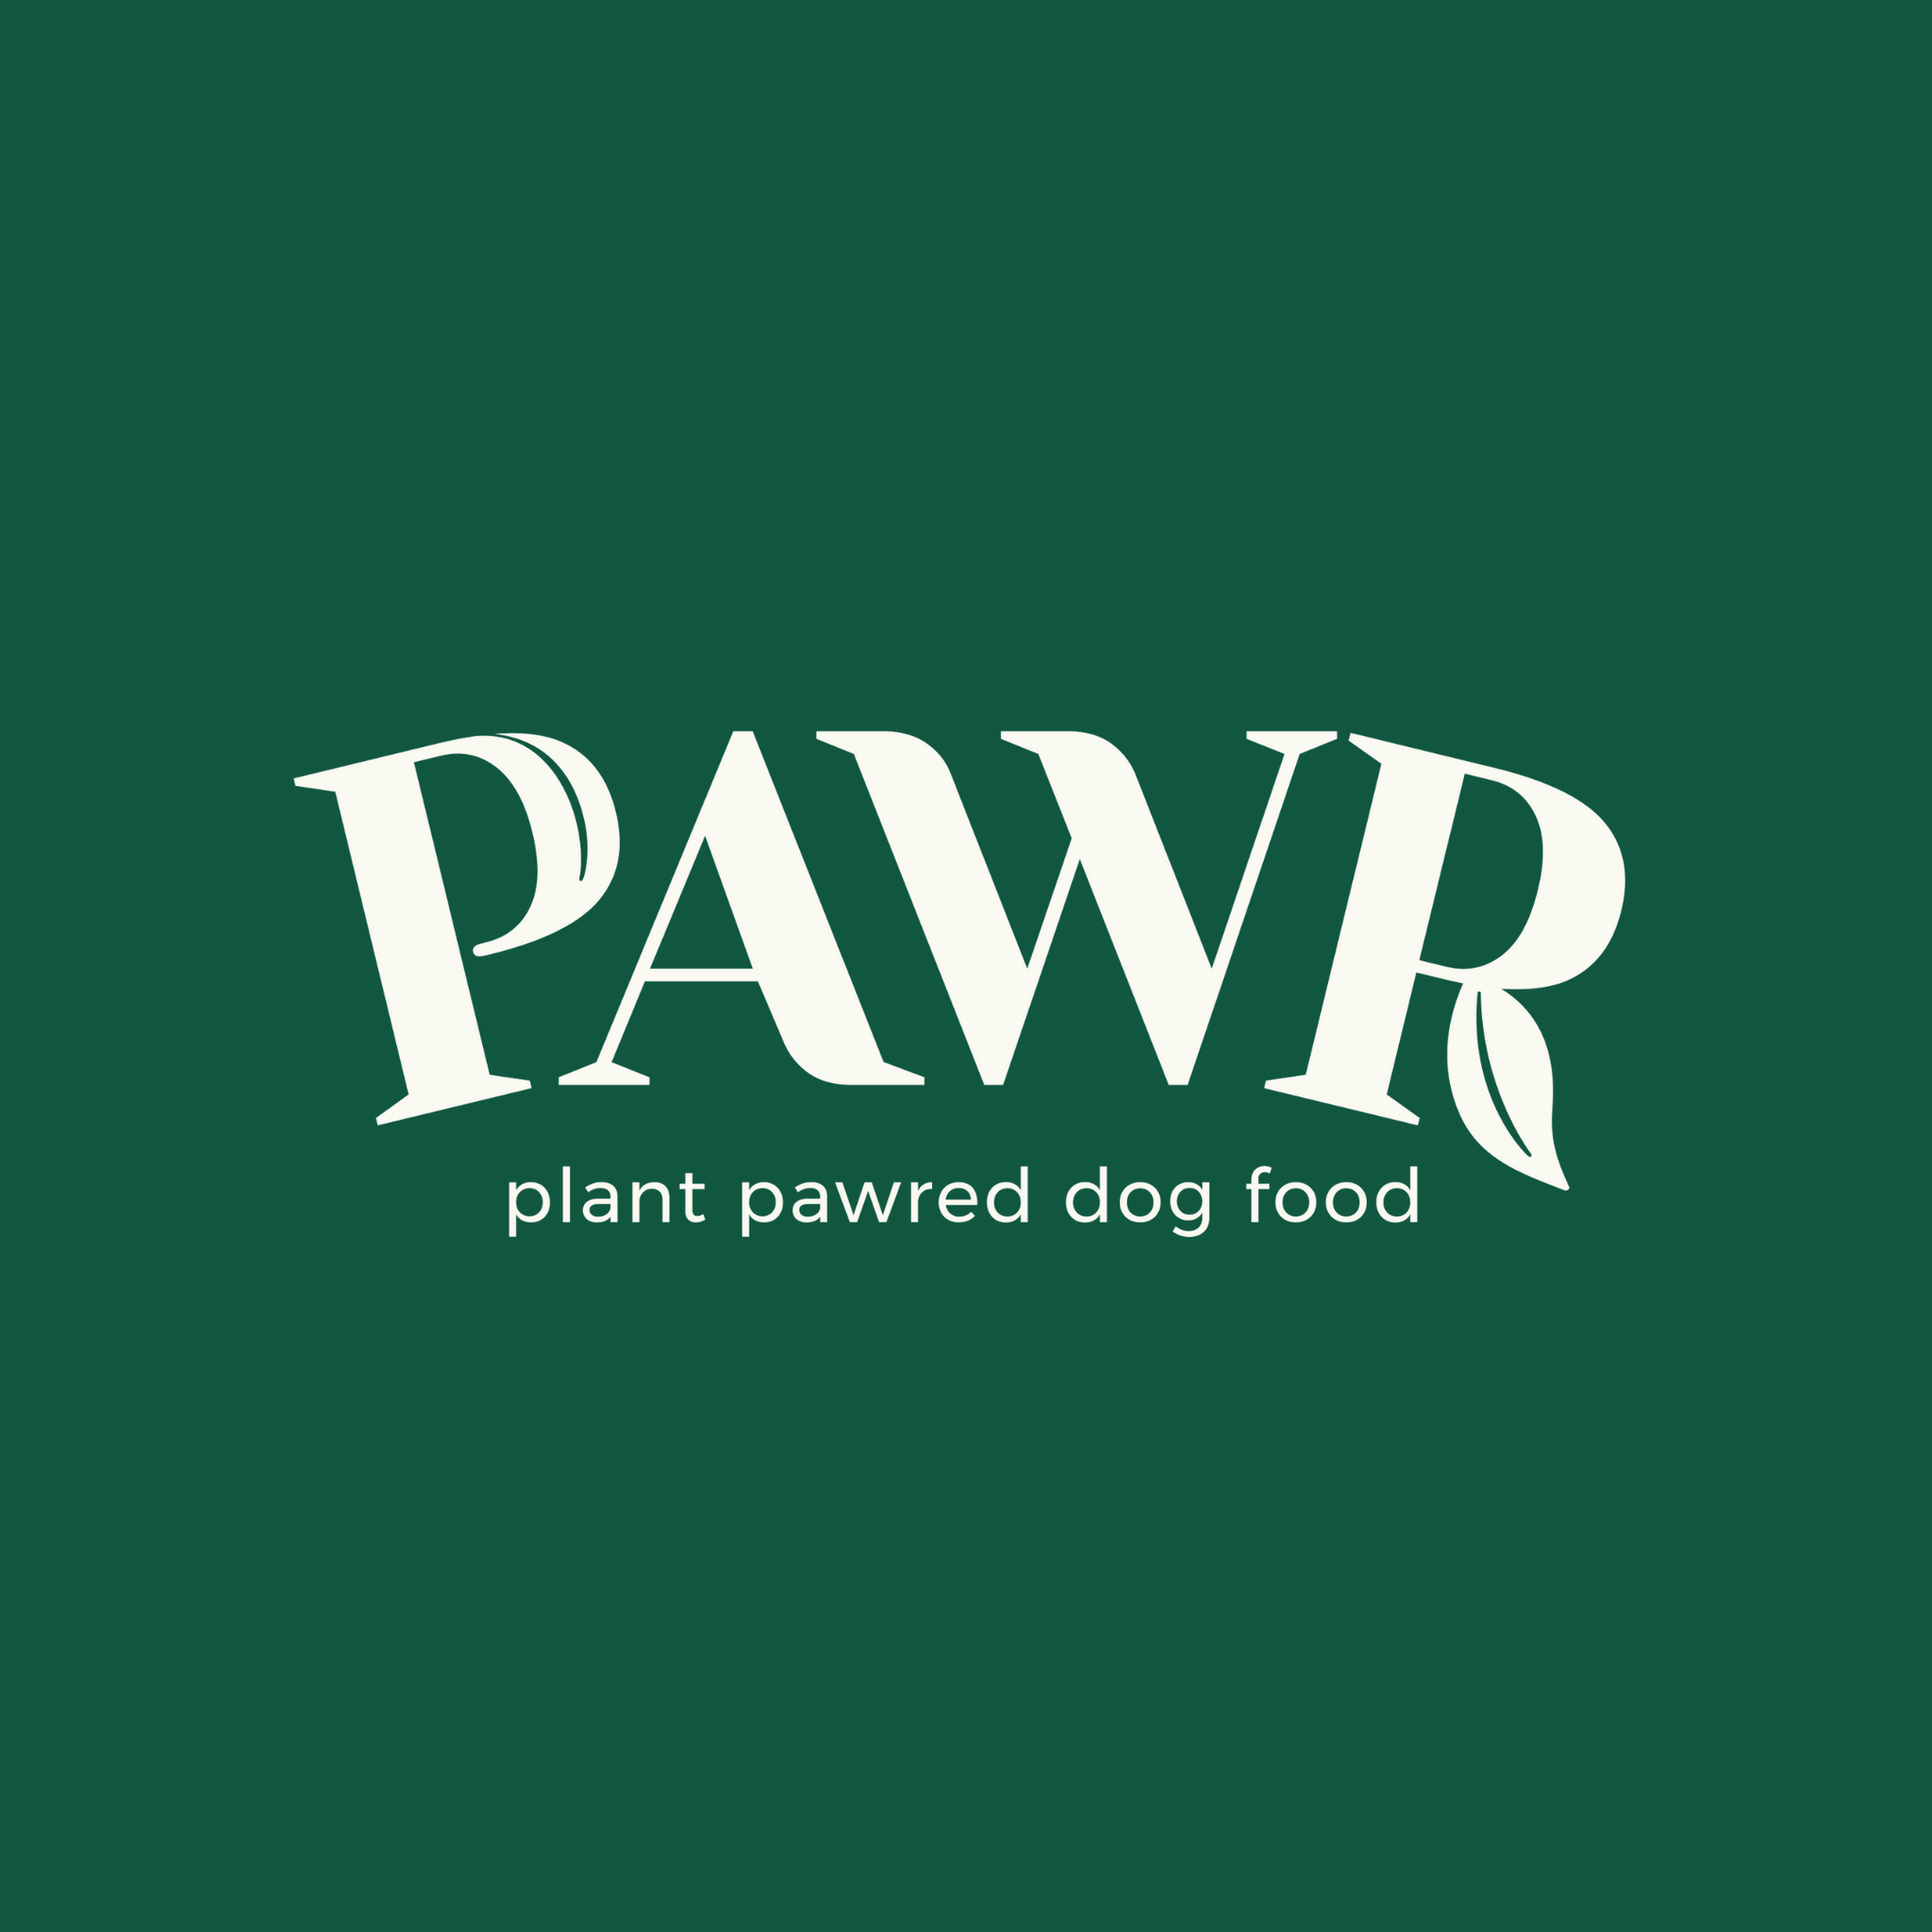 PAWR logo